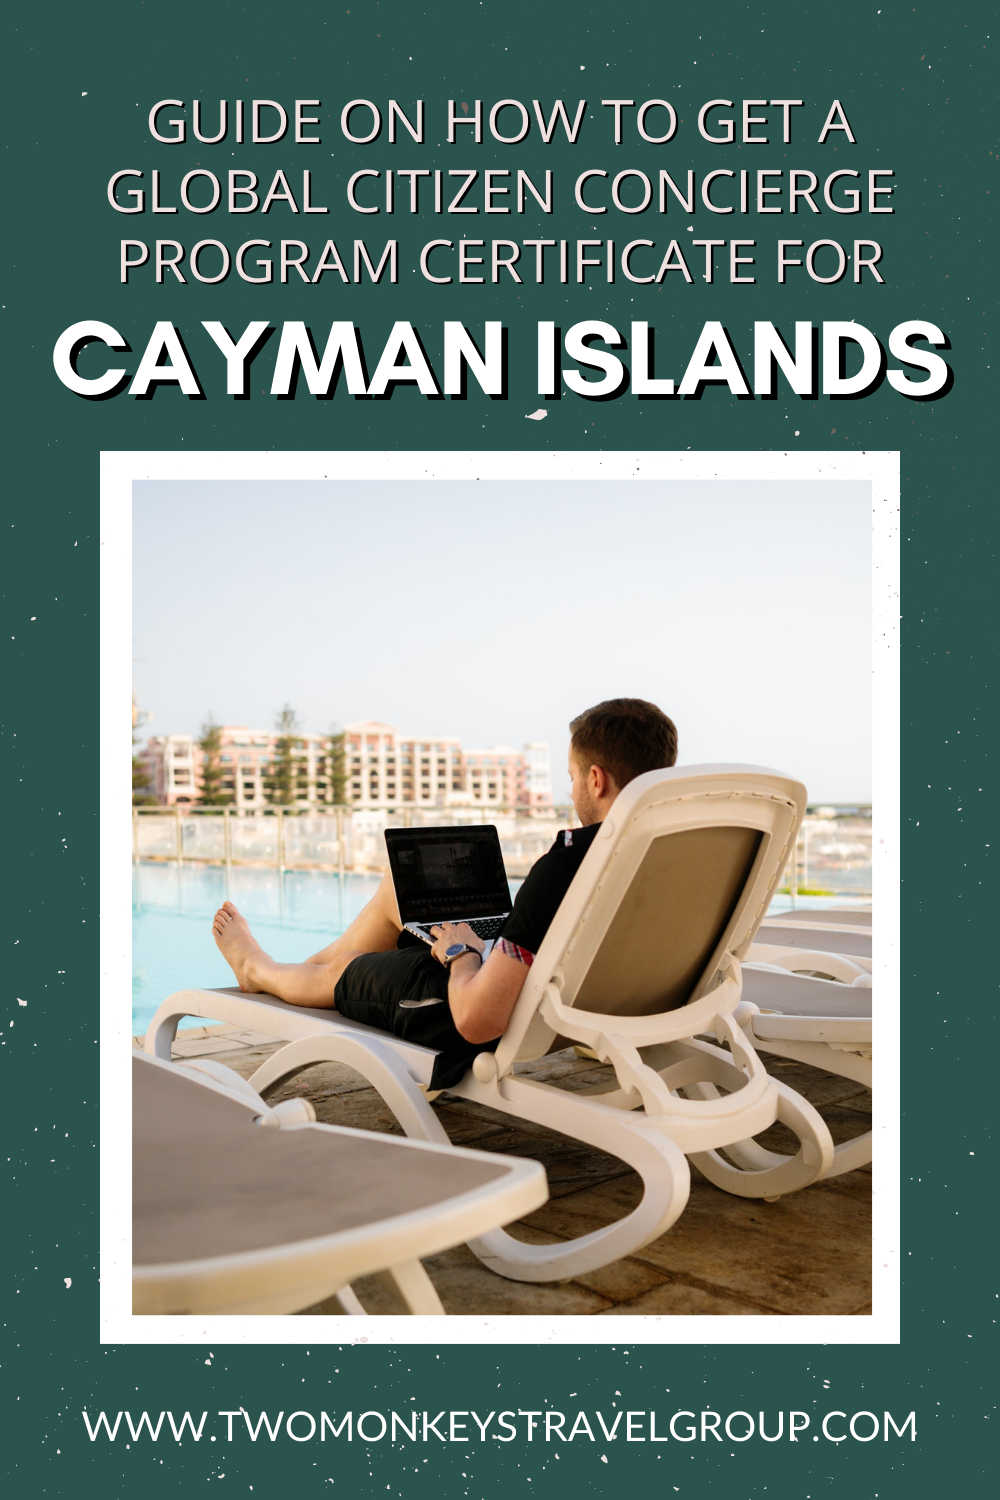 How to Get a Global Citizen Concierge Program Certificate for Cayman Islands (The Cayman Islands Digital Nomad Visa)